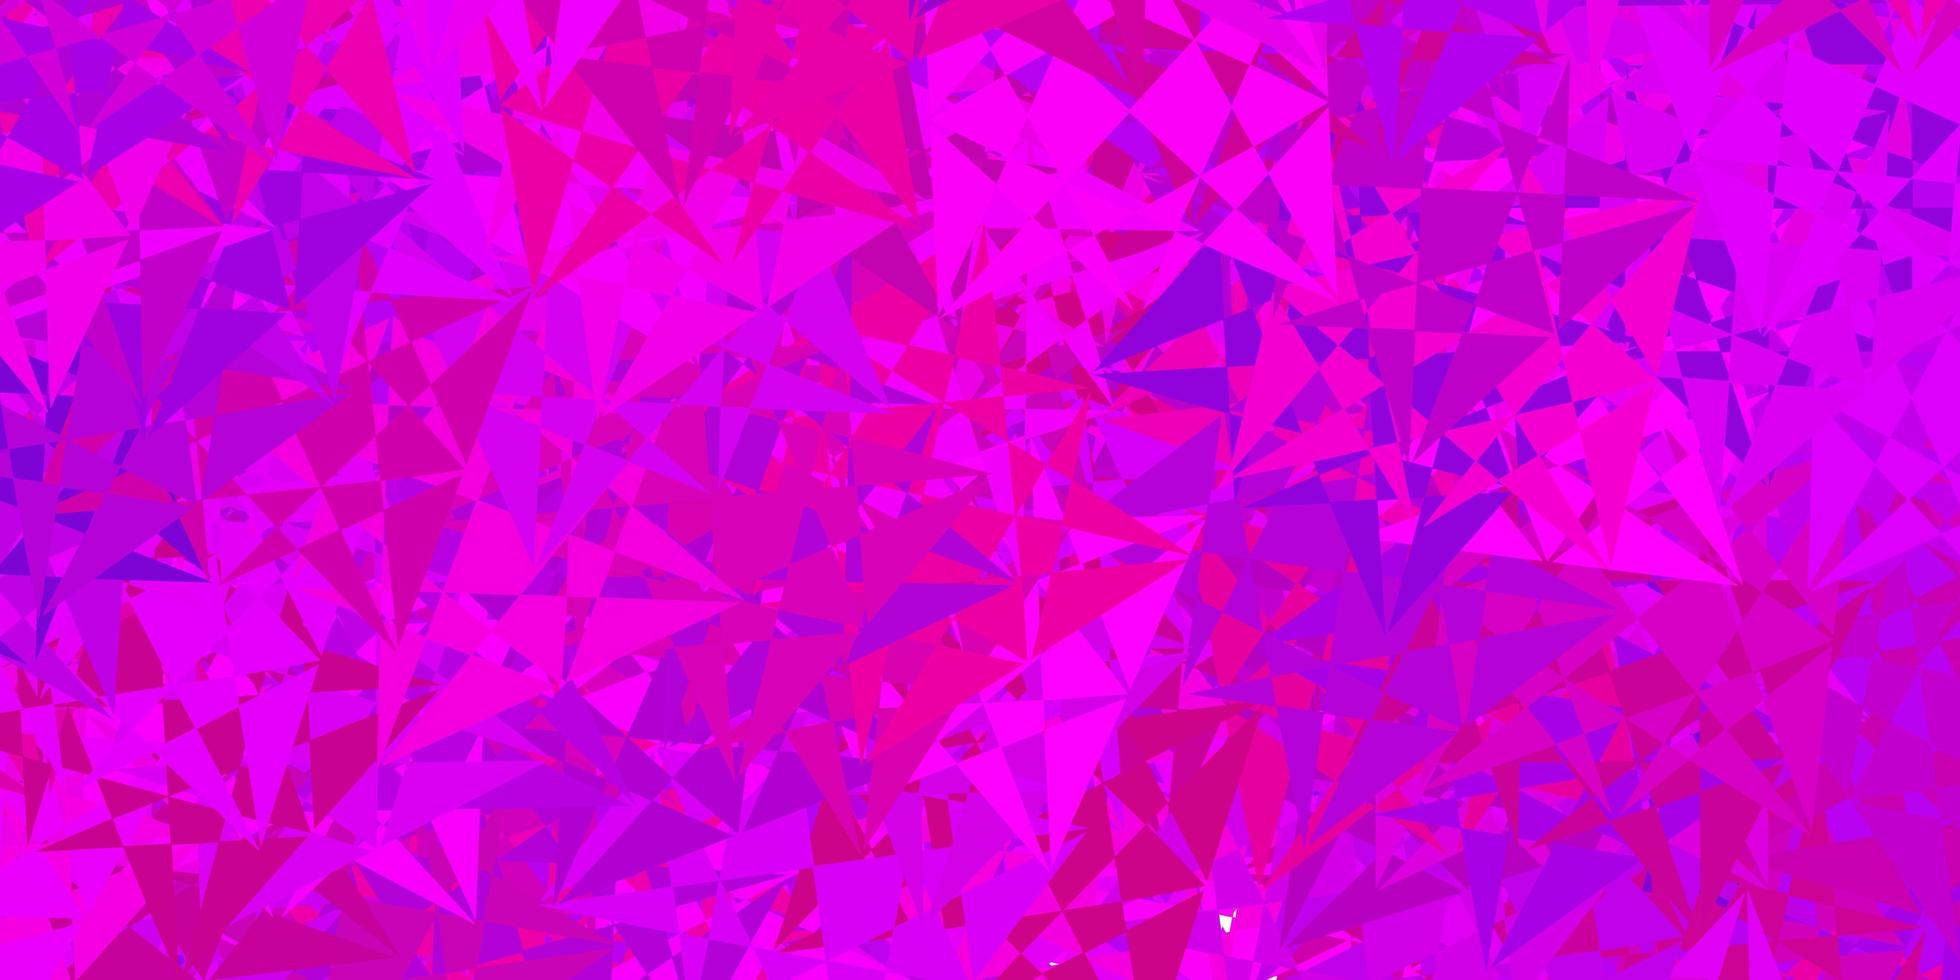 donkerpaarse, roze vectorlay-out met driehoeksvormen. vector